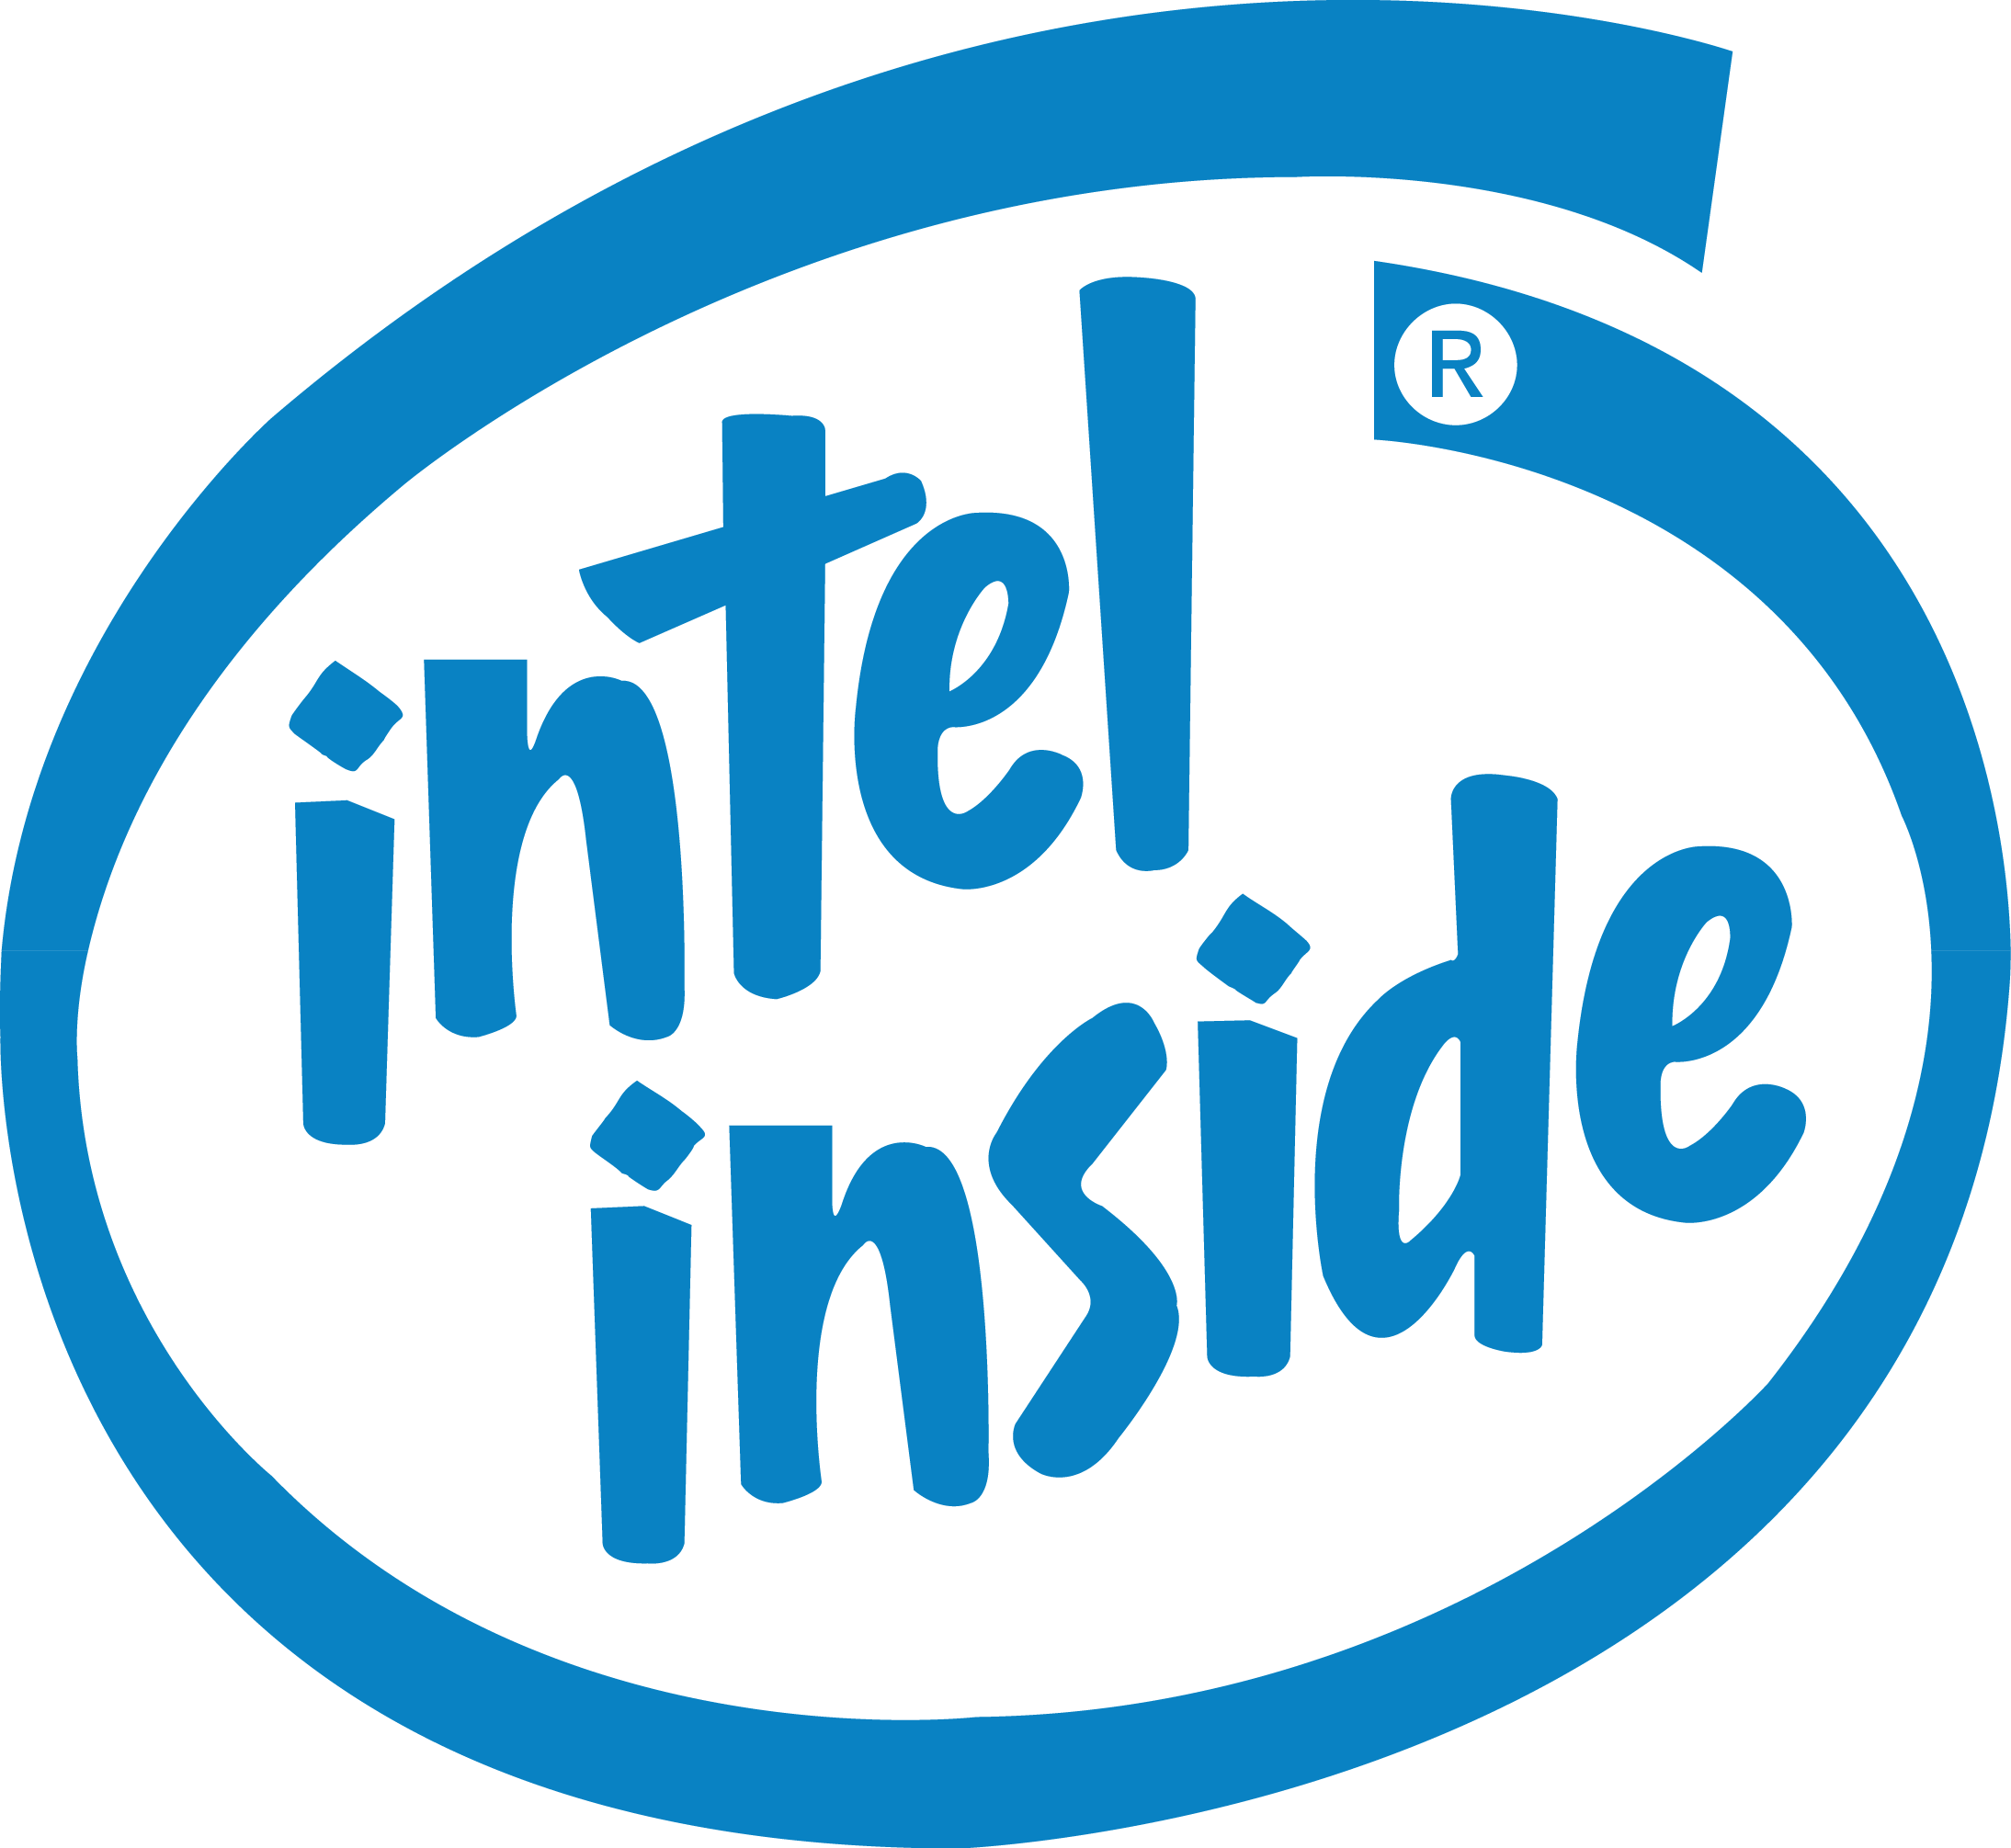 Intel Corporation logo on a g